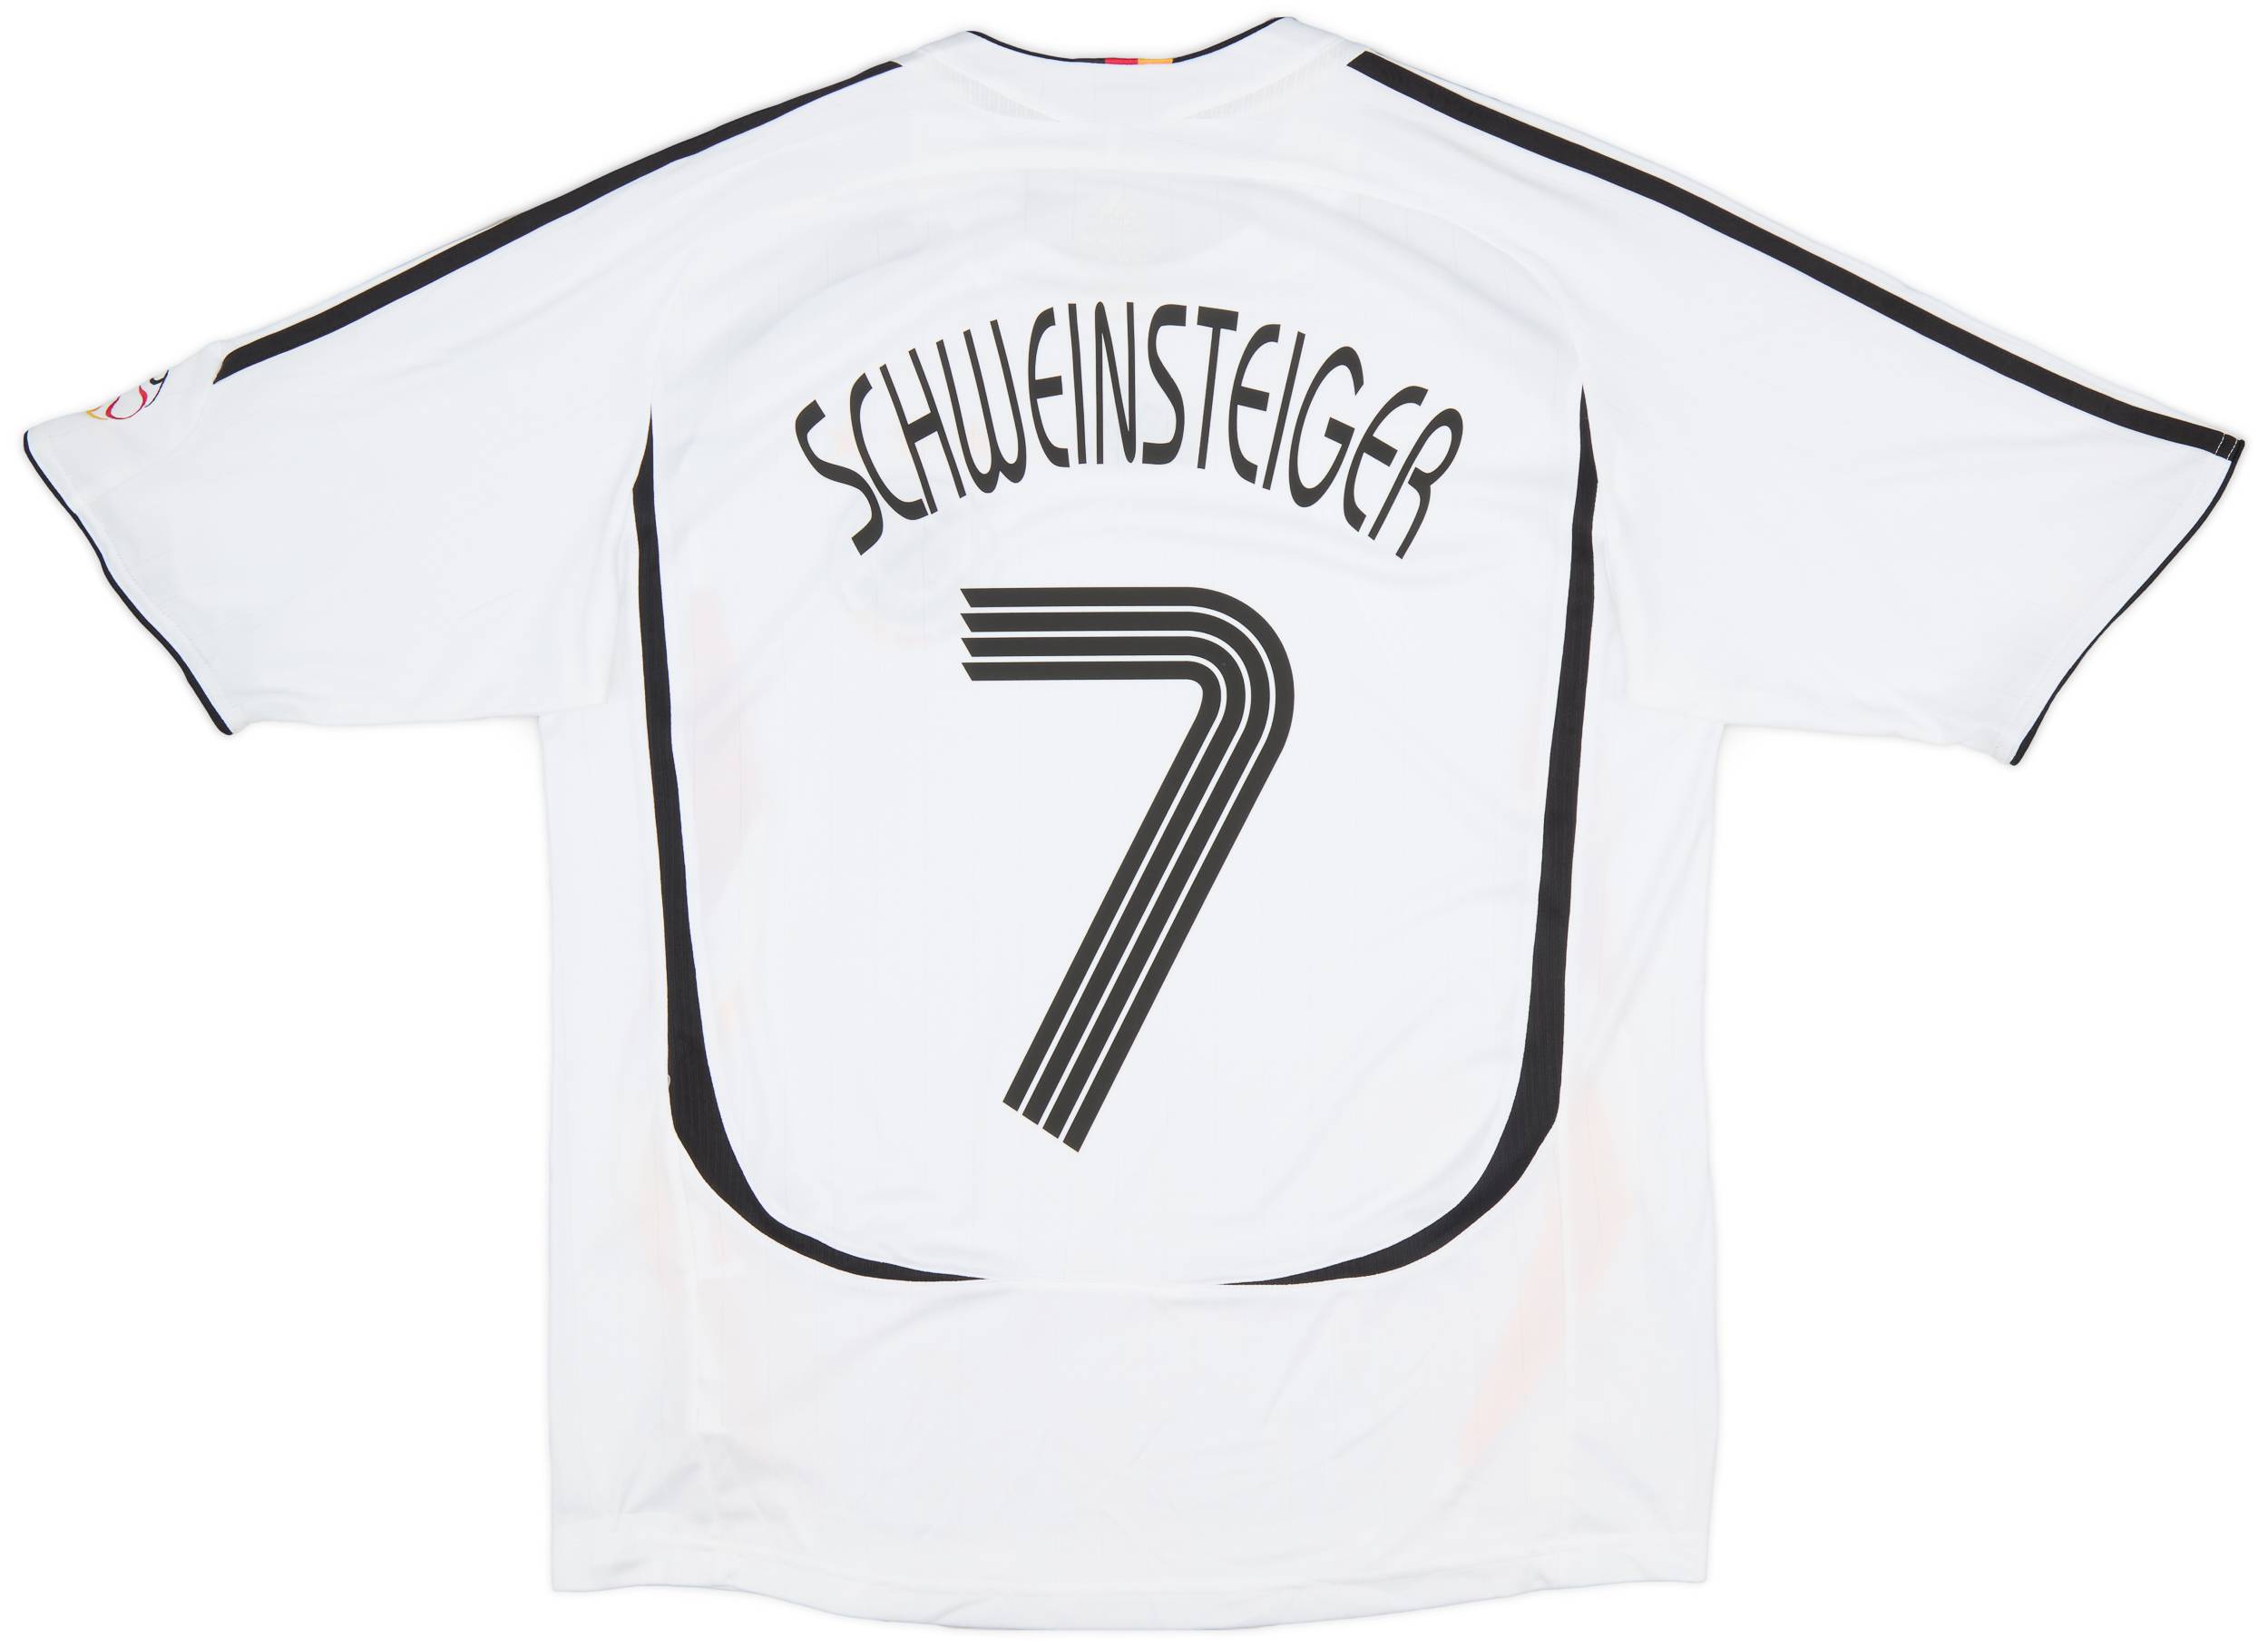 2005-07 Germany Home Shirt Schweinsteiger #7 - 10/10 - (XL.Boys)